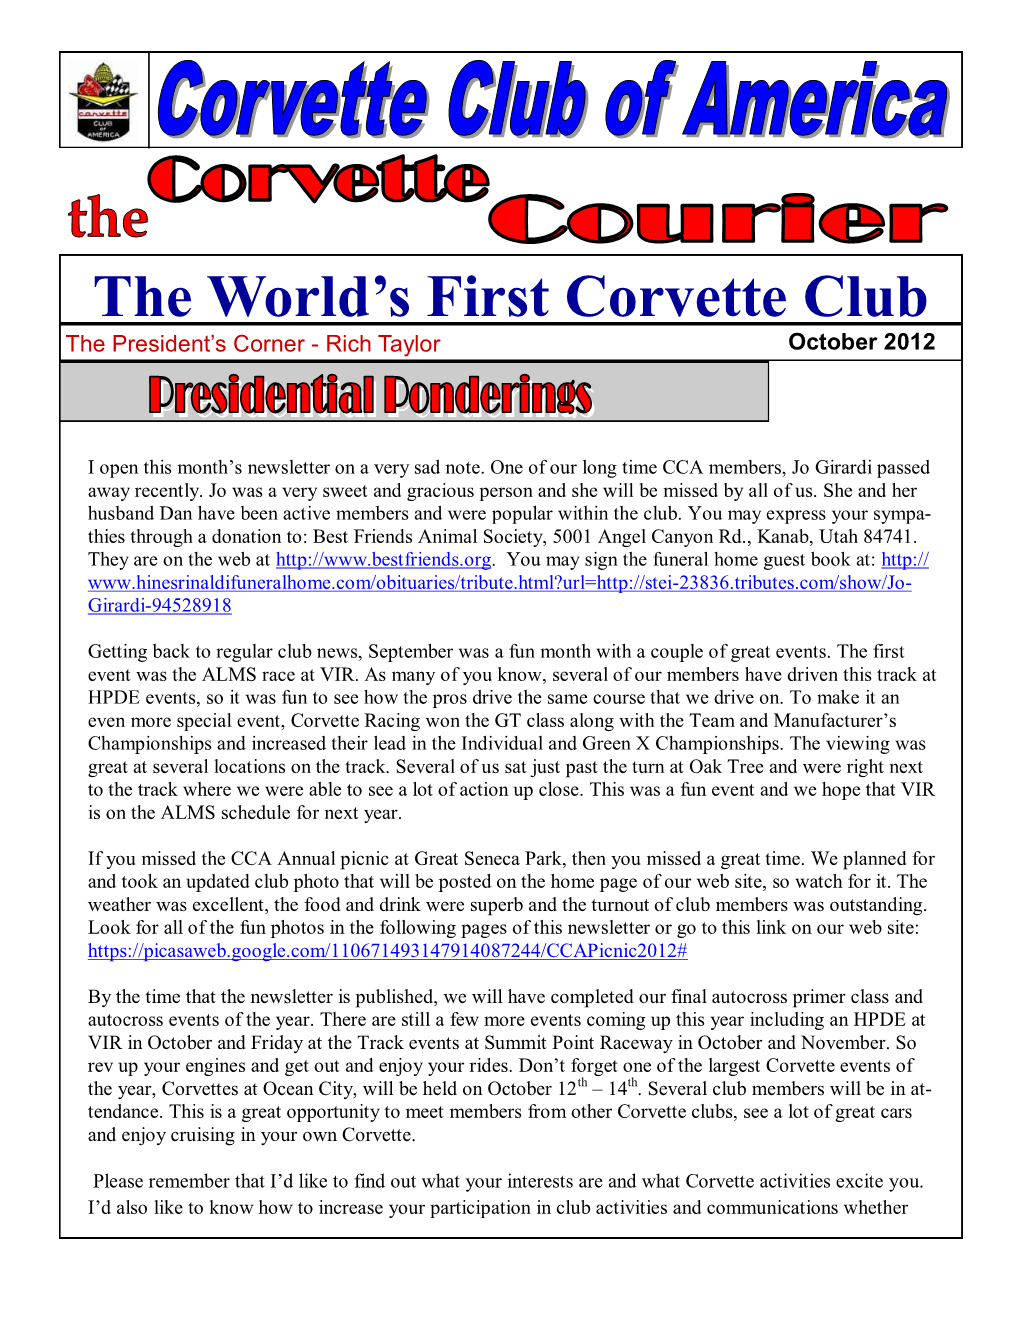 The World's First Corvette Club